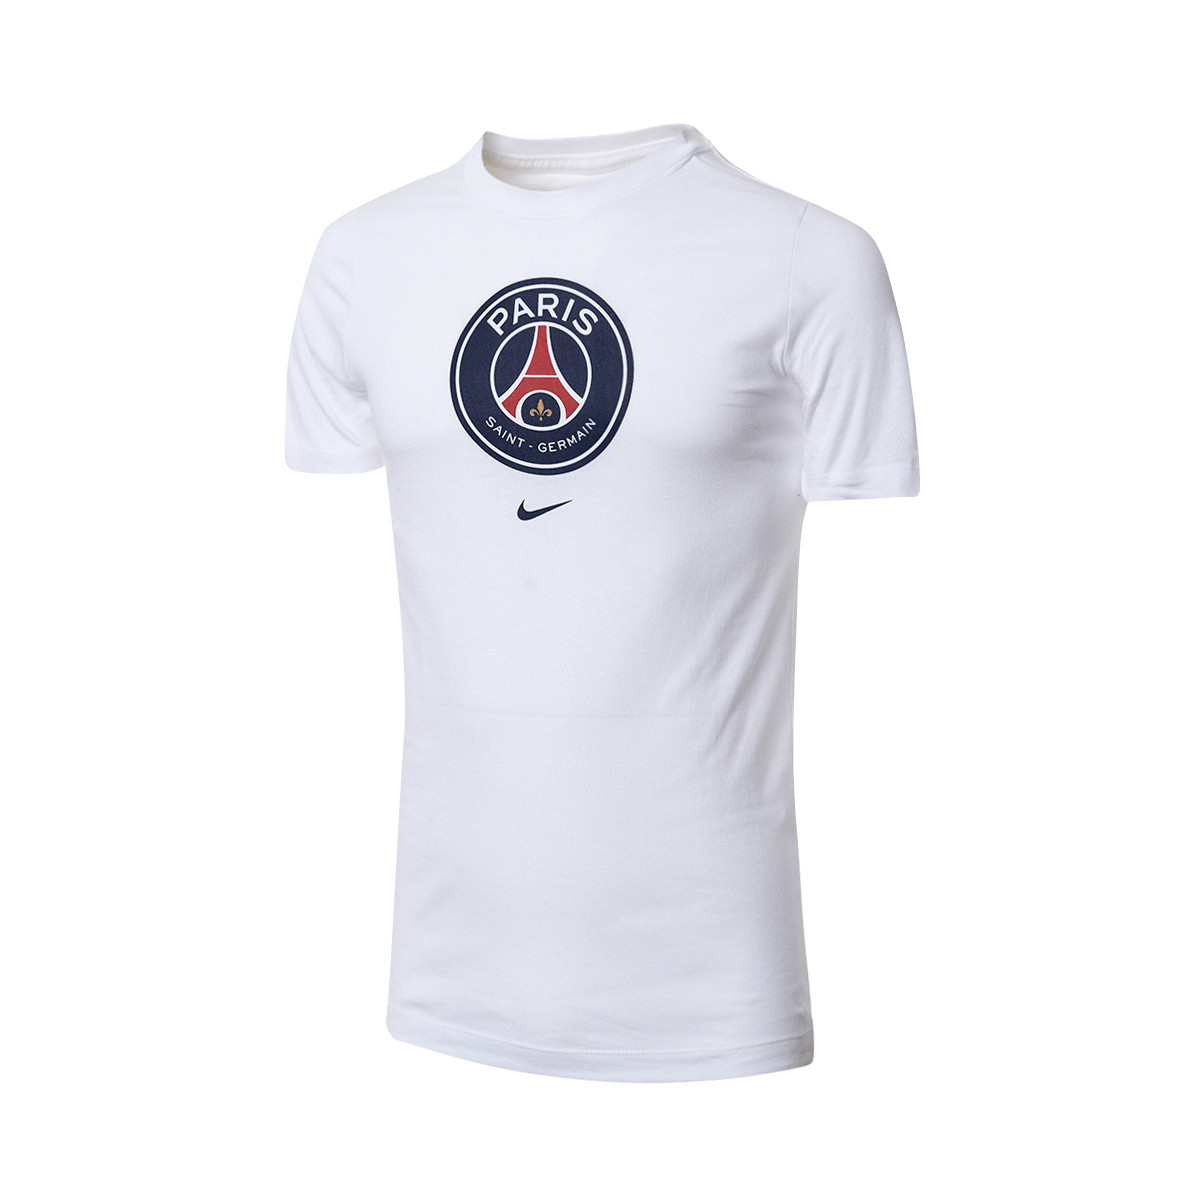 Nike Paris Saint Germain - PSG tričko biele detské - SKLADOM